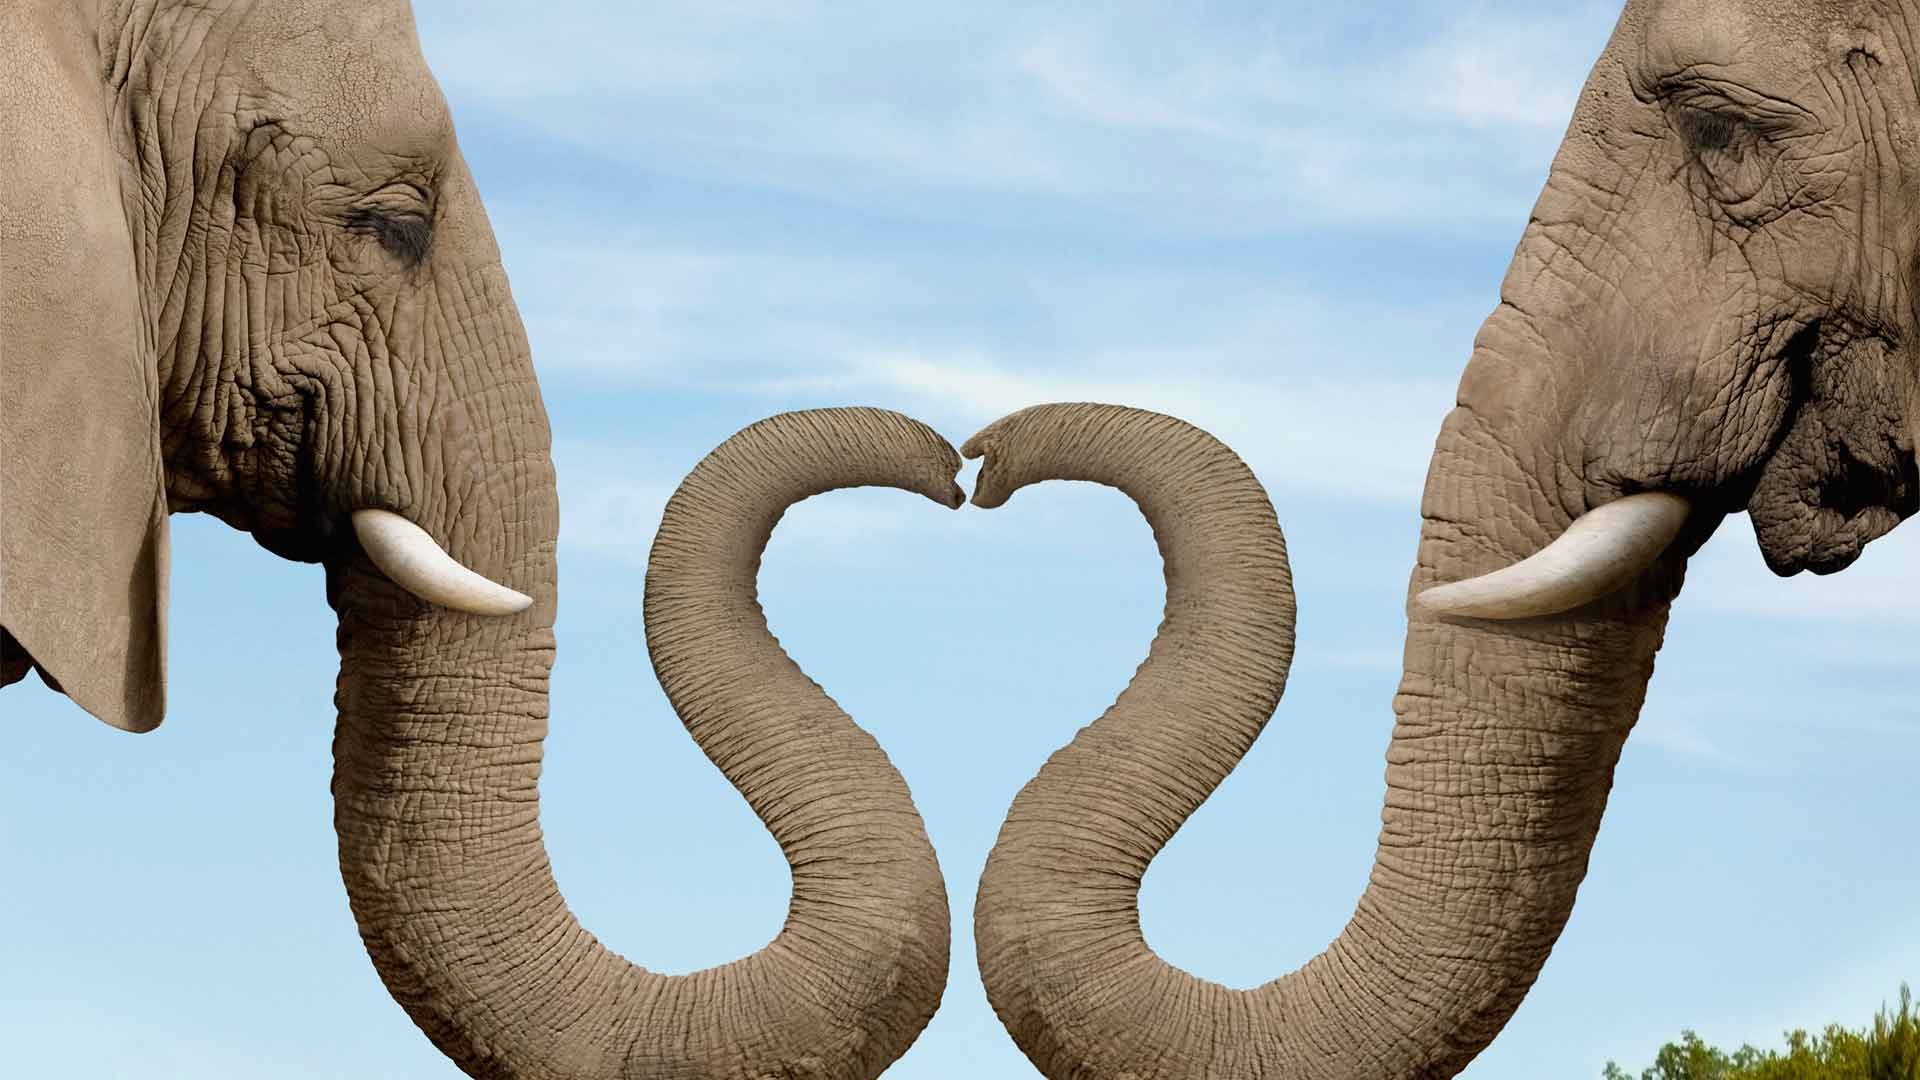 Love nose cute elephant wallpaper Animal desktop background